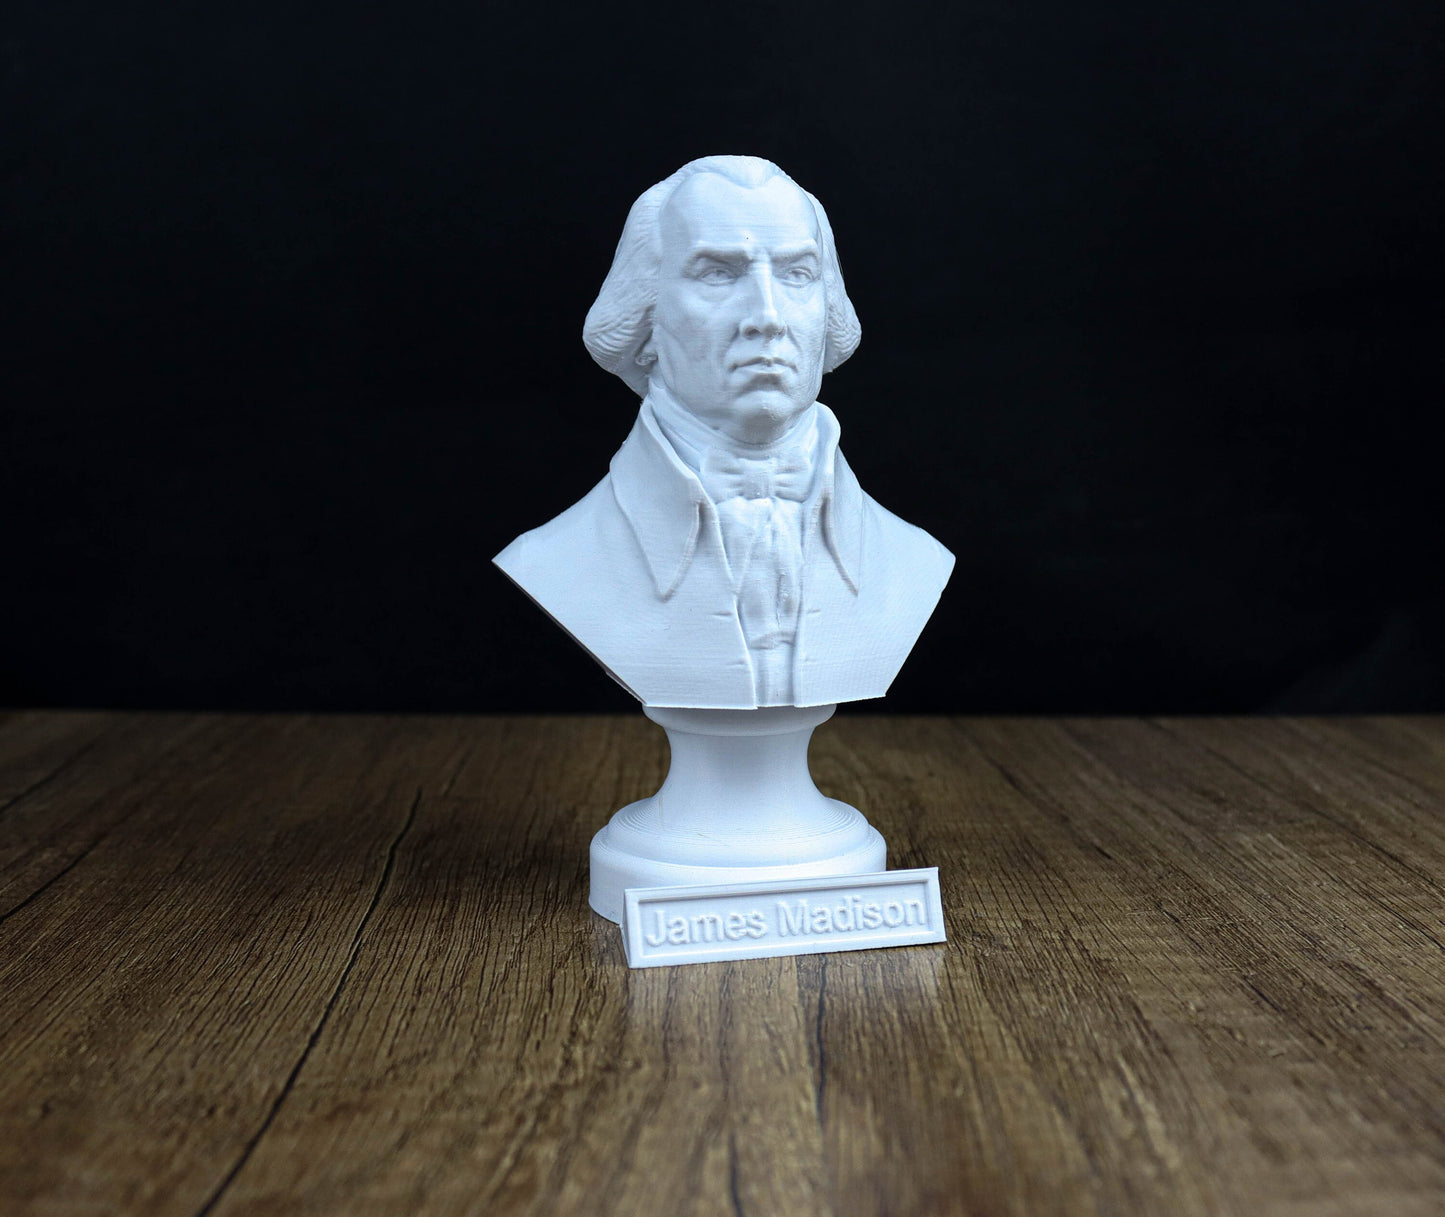 Founding Fathers Busts Value Pack Collection: George Washington, Benjamin Franklin, Thomas Jefferson, Alexander Hamilton, John Adams etc